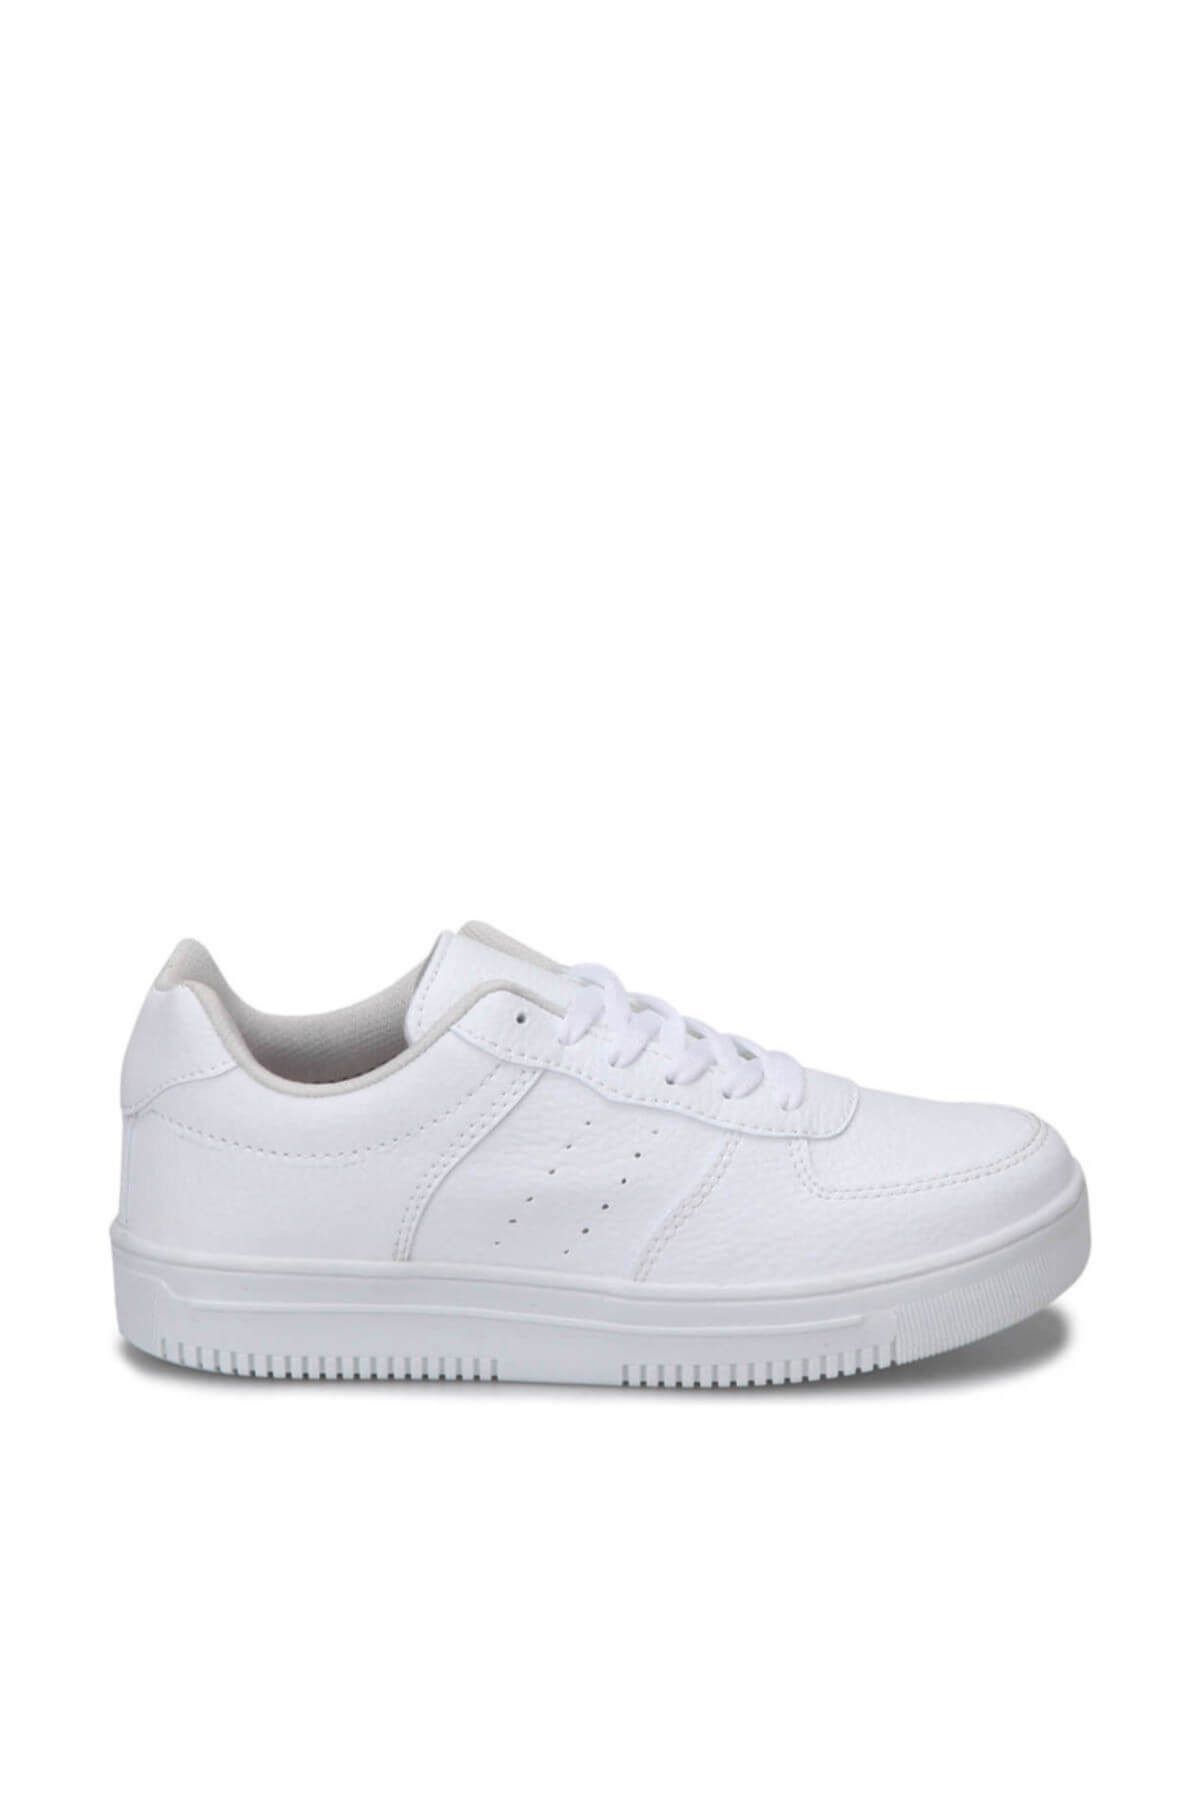 Torex JODER Beyaz Erkek Sneaker Ayakkabı 100286711